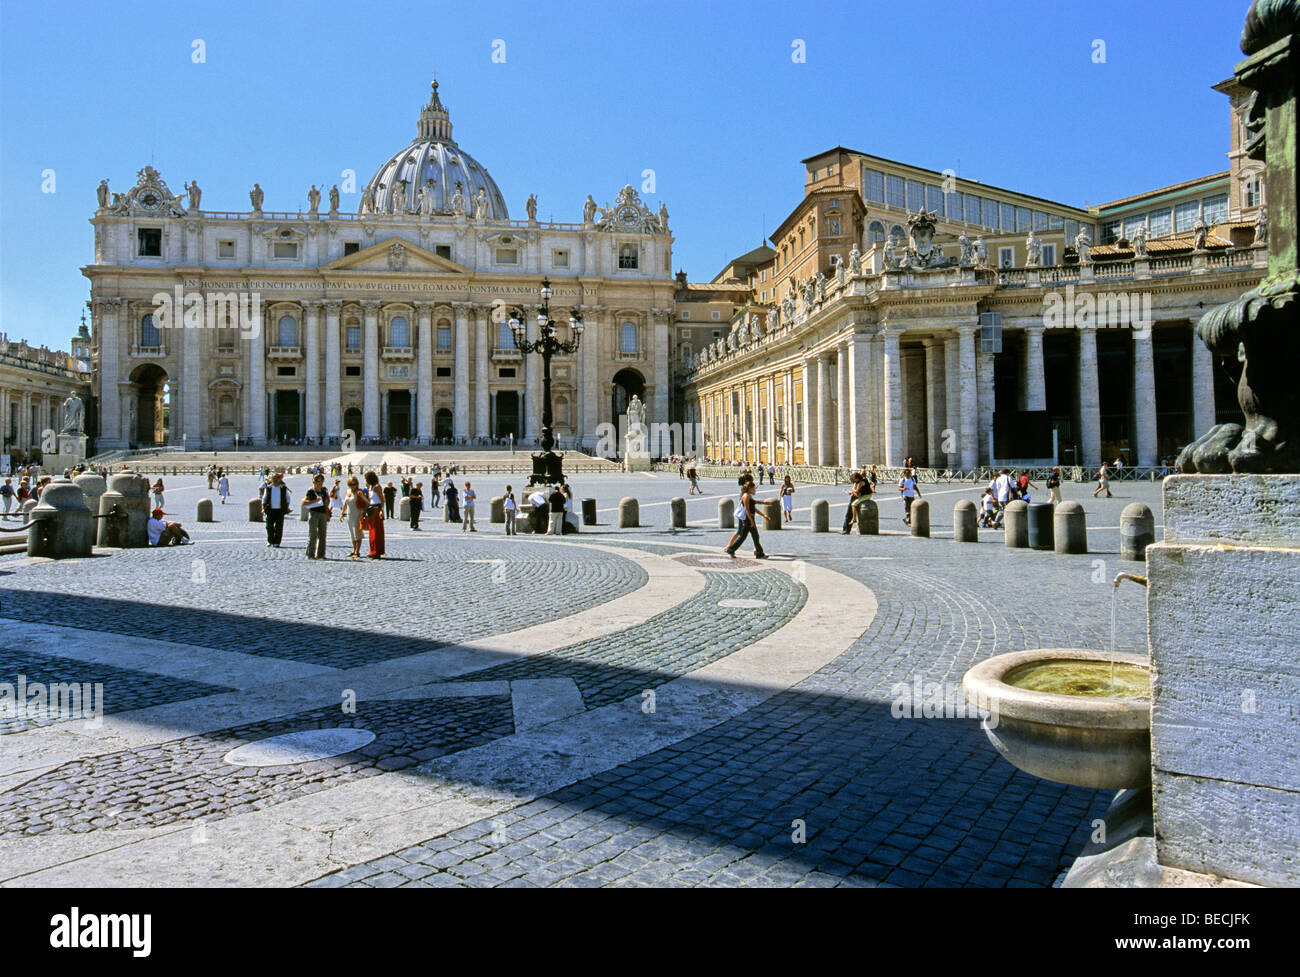 St. Peter's Basilica, Basilica di San Pietro, drinking water fountain, Saint Peter's Square, Piazza San Pietro, Vatican City, R Stock Photo